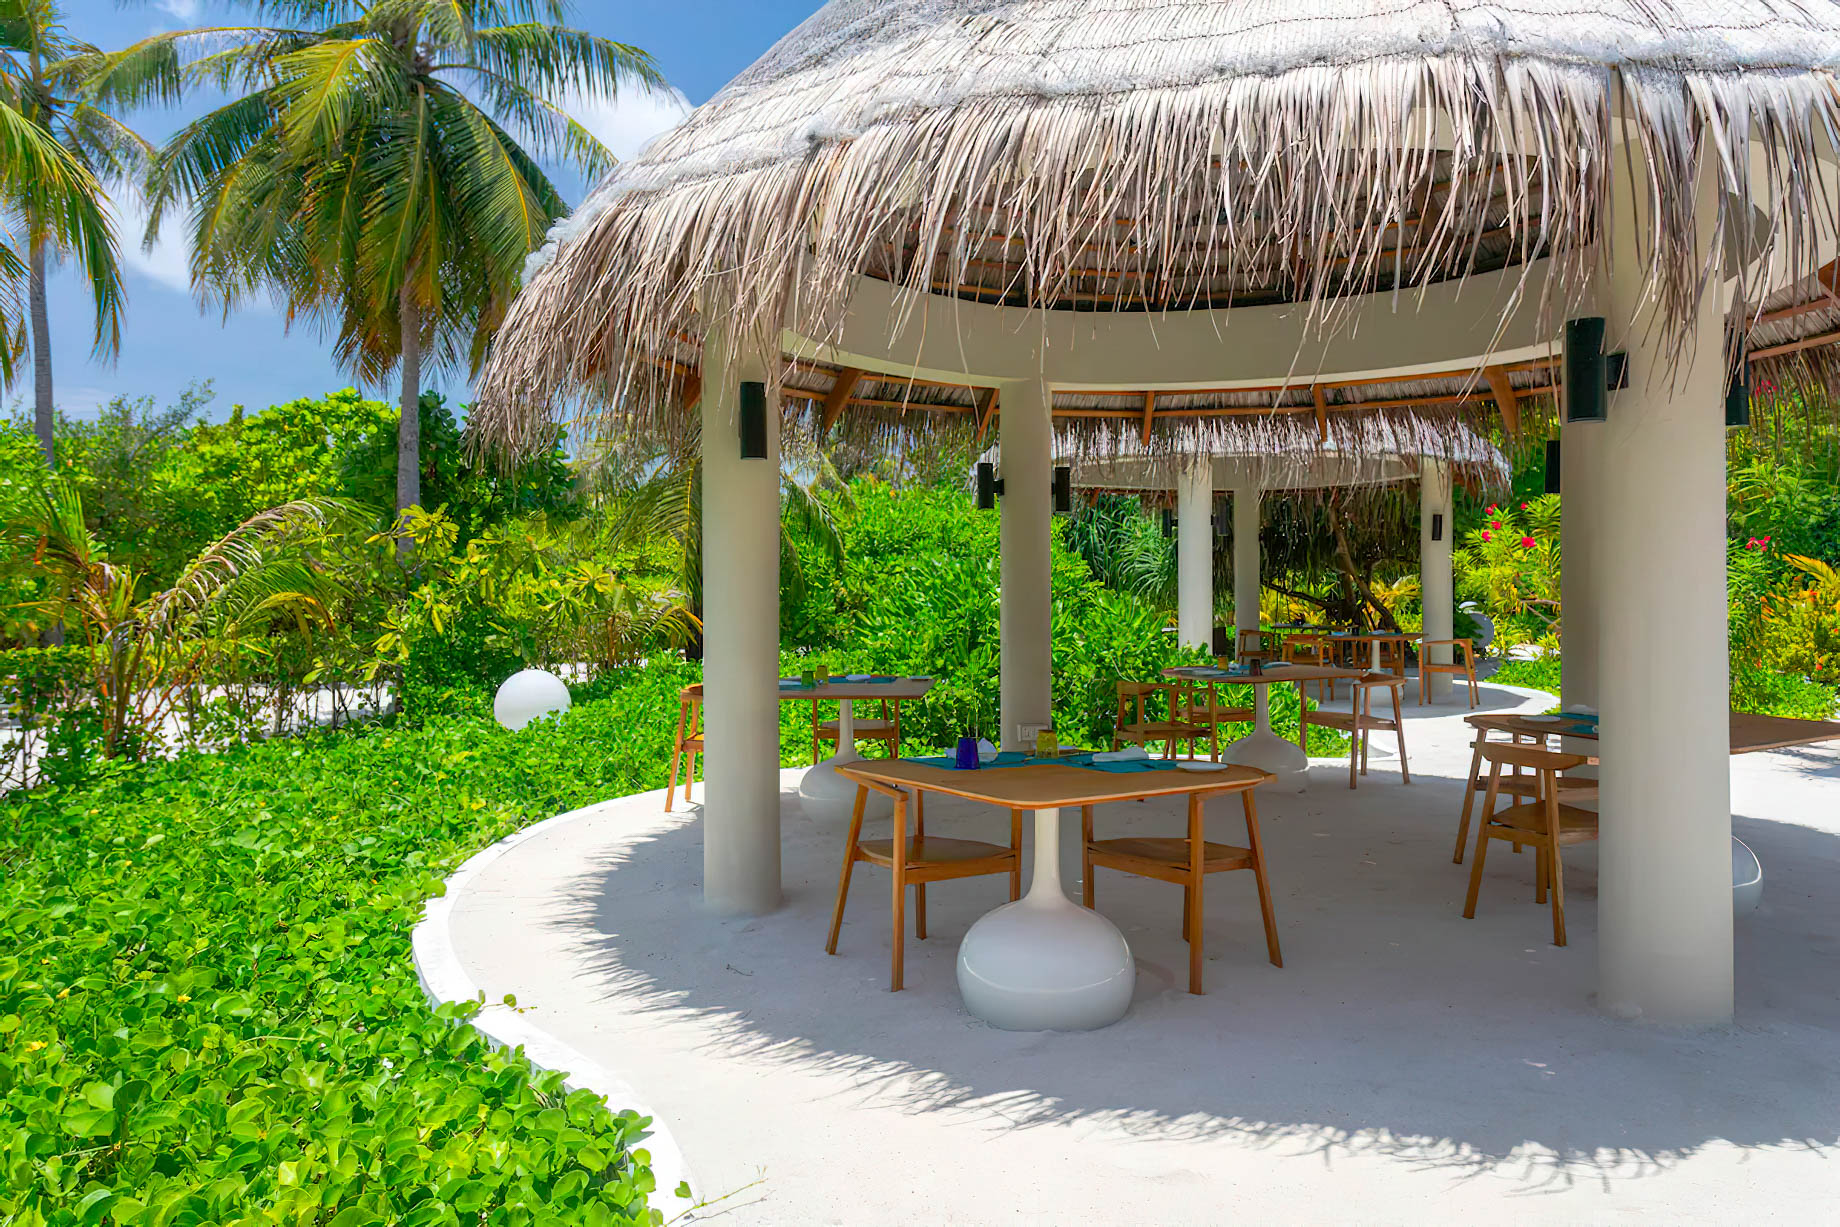 Cocoon Maldives Resort – Ookolhufinolhu, Lhaviyani Atoll, Maldives – Octopus Restaurant Outdoor Tables